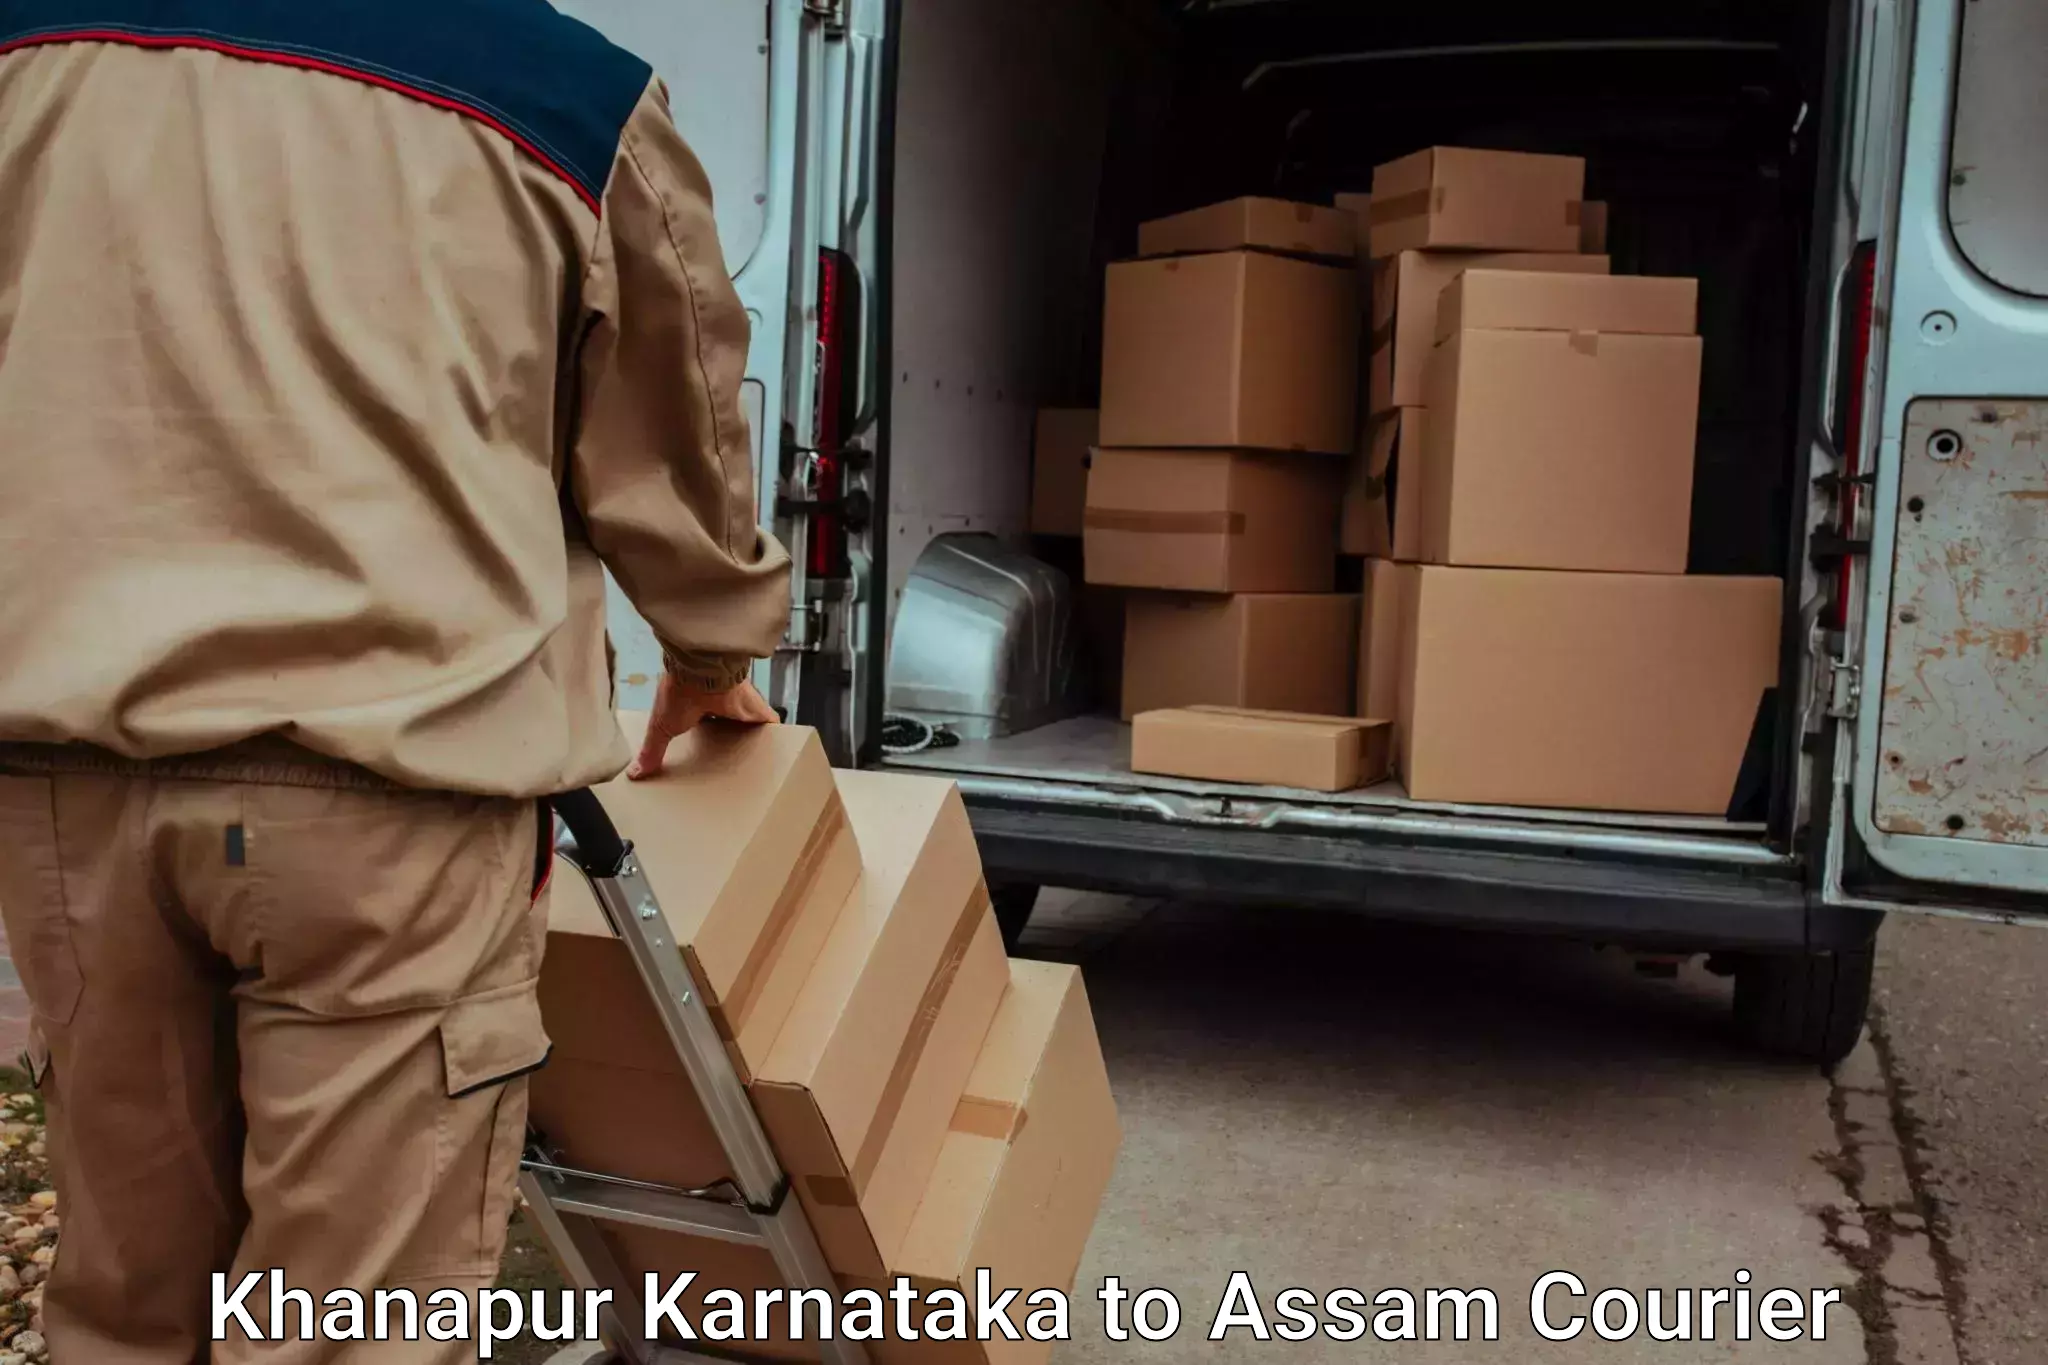 Baggage transport professionals Khanapur Karnataka to Lakhipur